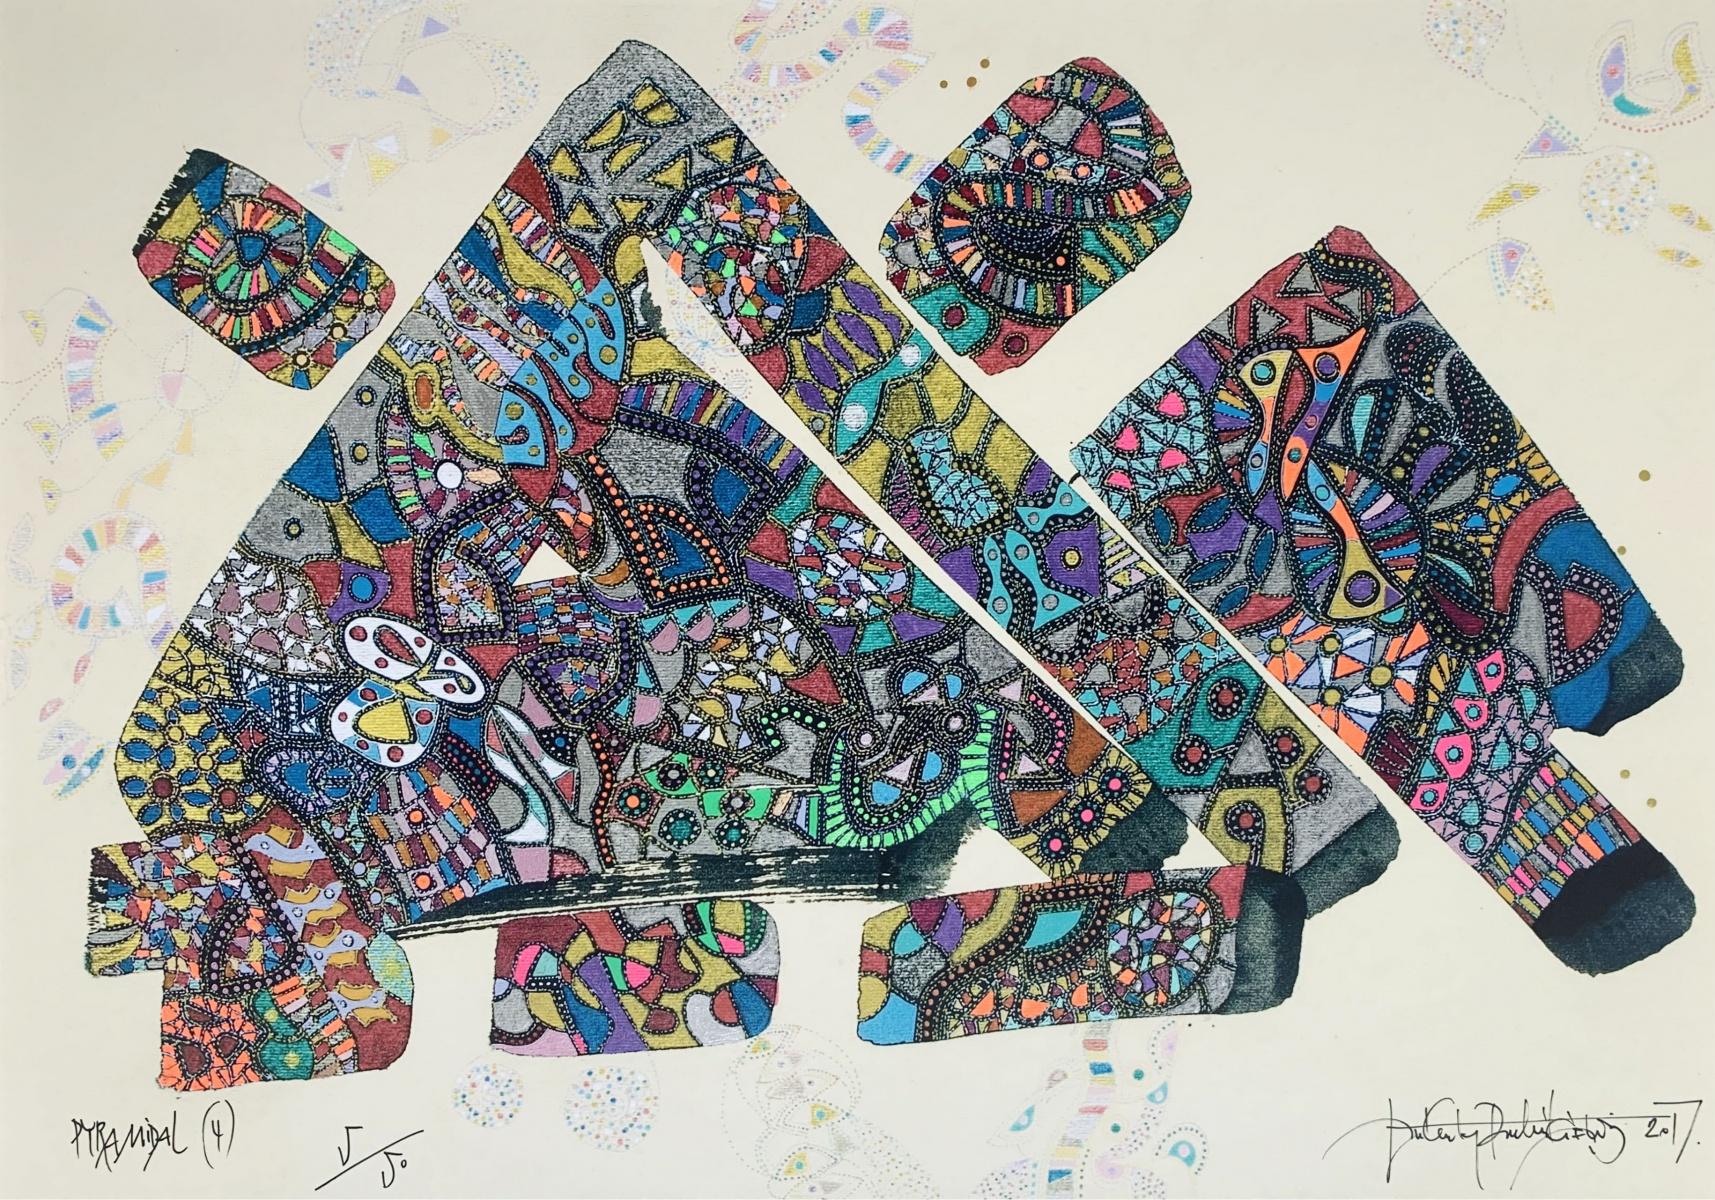 Jan Kanty Pawluśkiewicz Abstract Print - Pyramidal 4 - XXI century, Mixed media, Gel art, Abstract print, Colorful